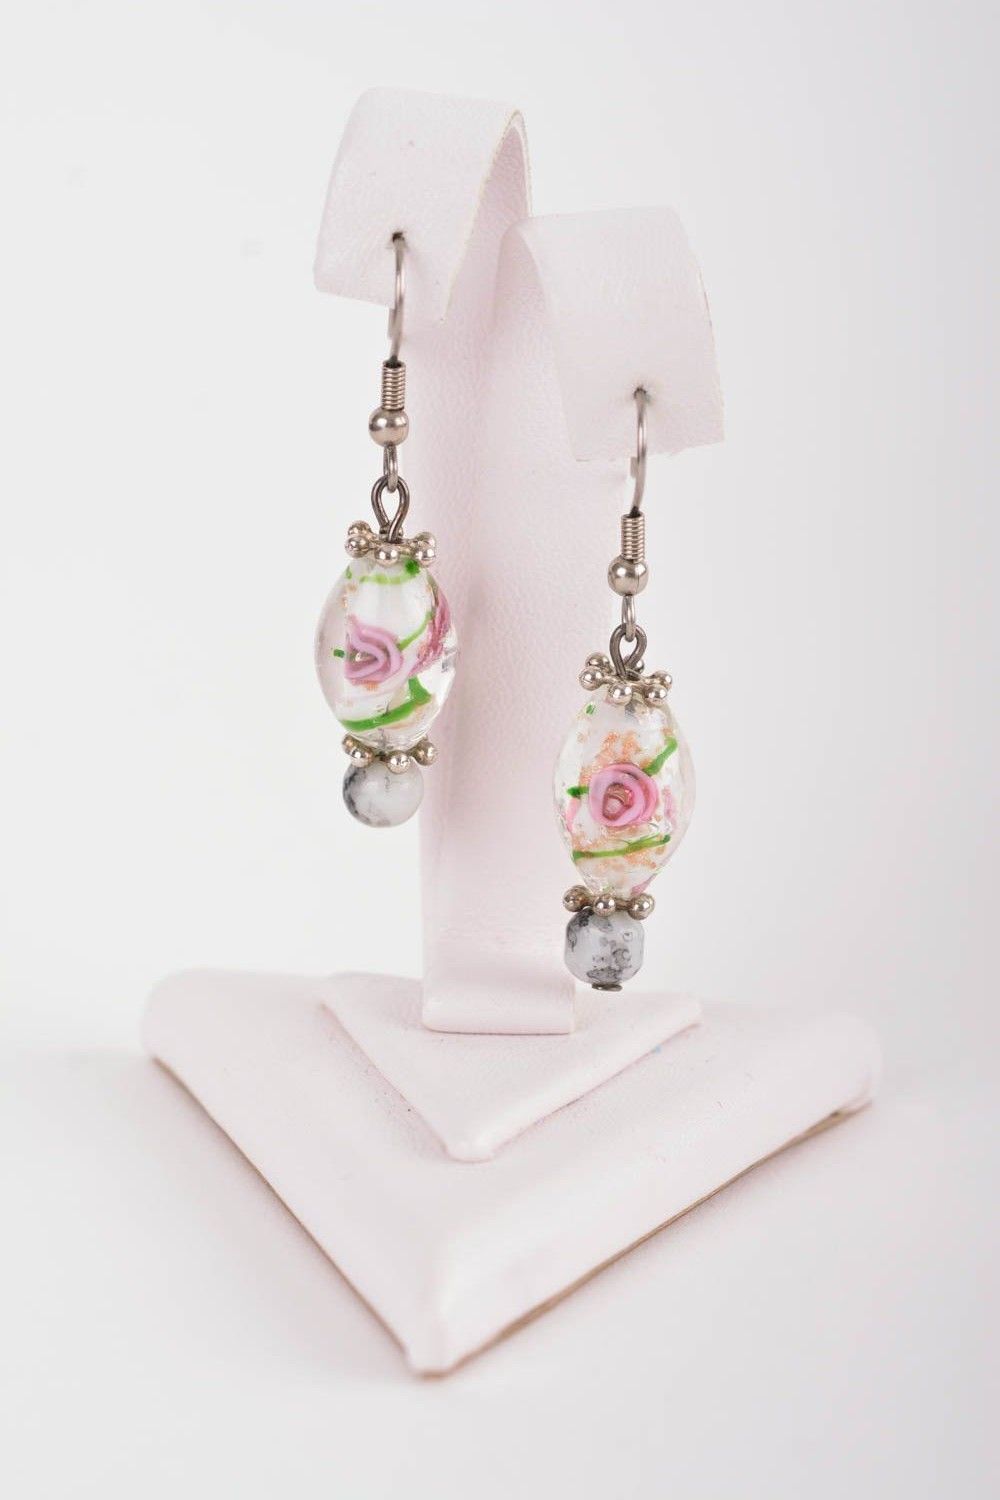 Handmade earrings glass earrings unusual accessory gift ideas glass jewelry photo 5